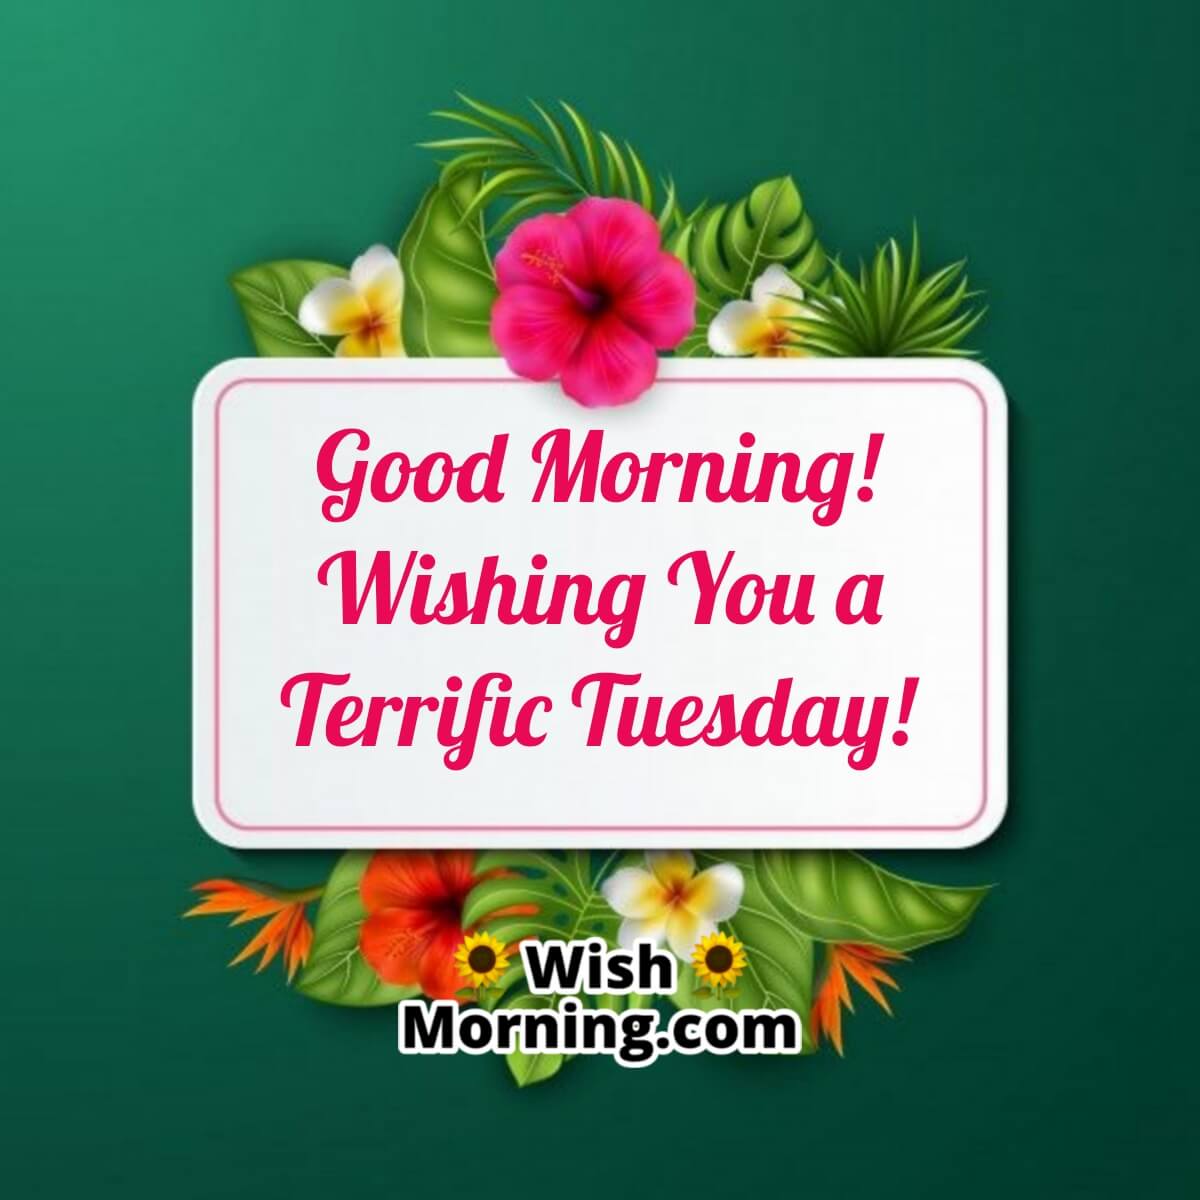 Good Morning! Wishing You A Terrific Tuesday!